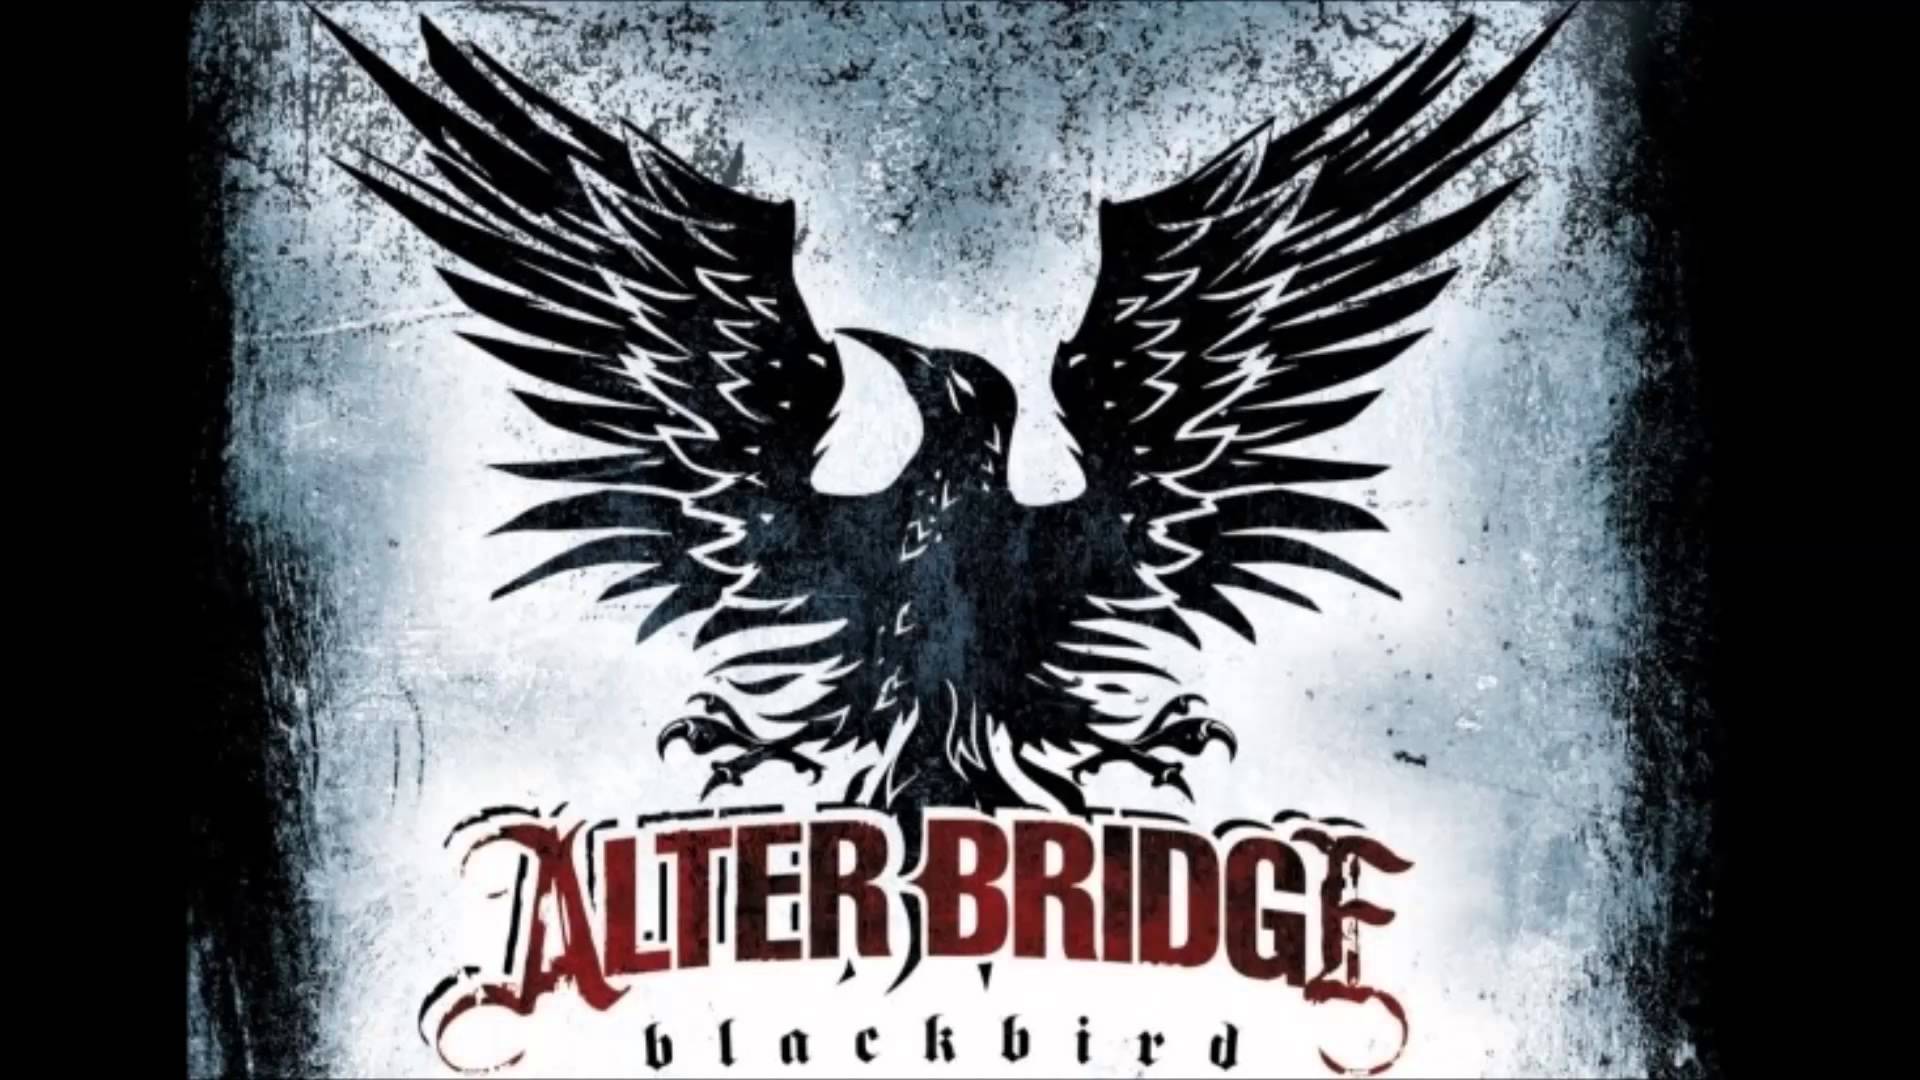 Brand New Start Bridge (Blackbird)